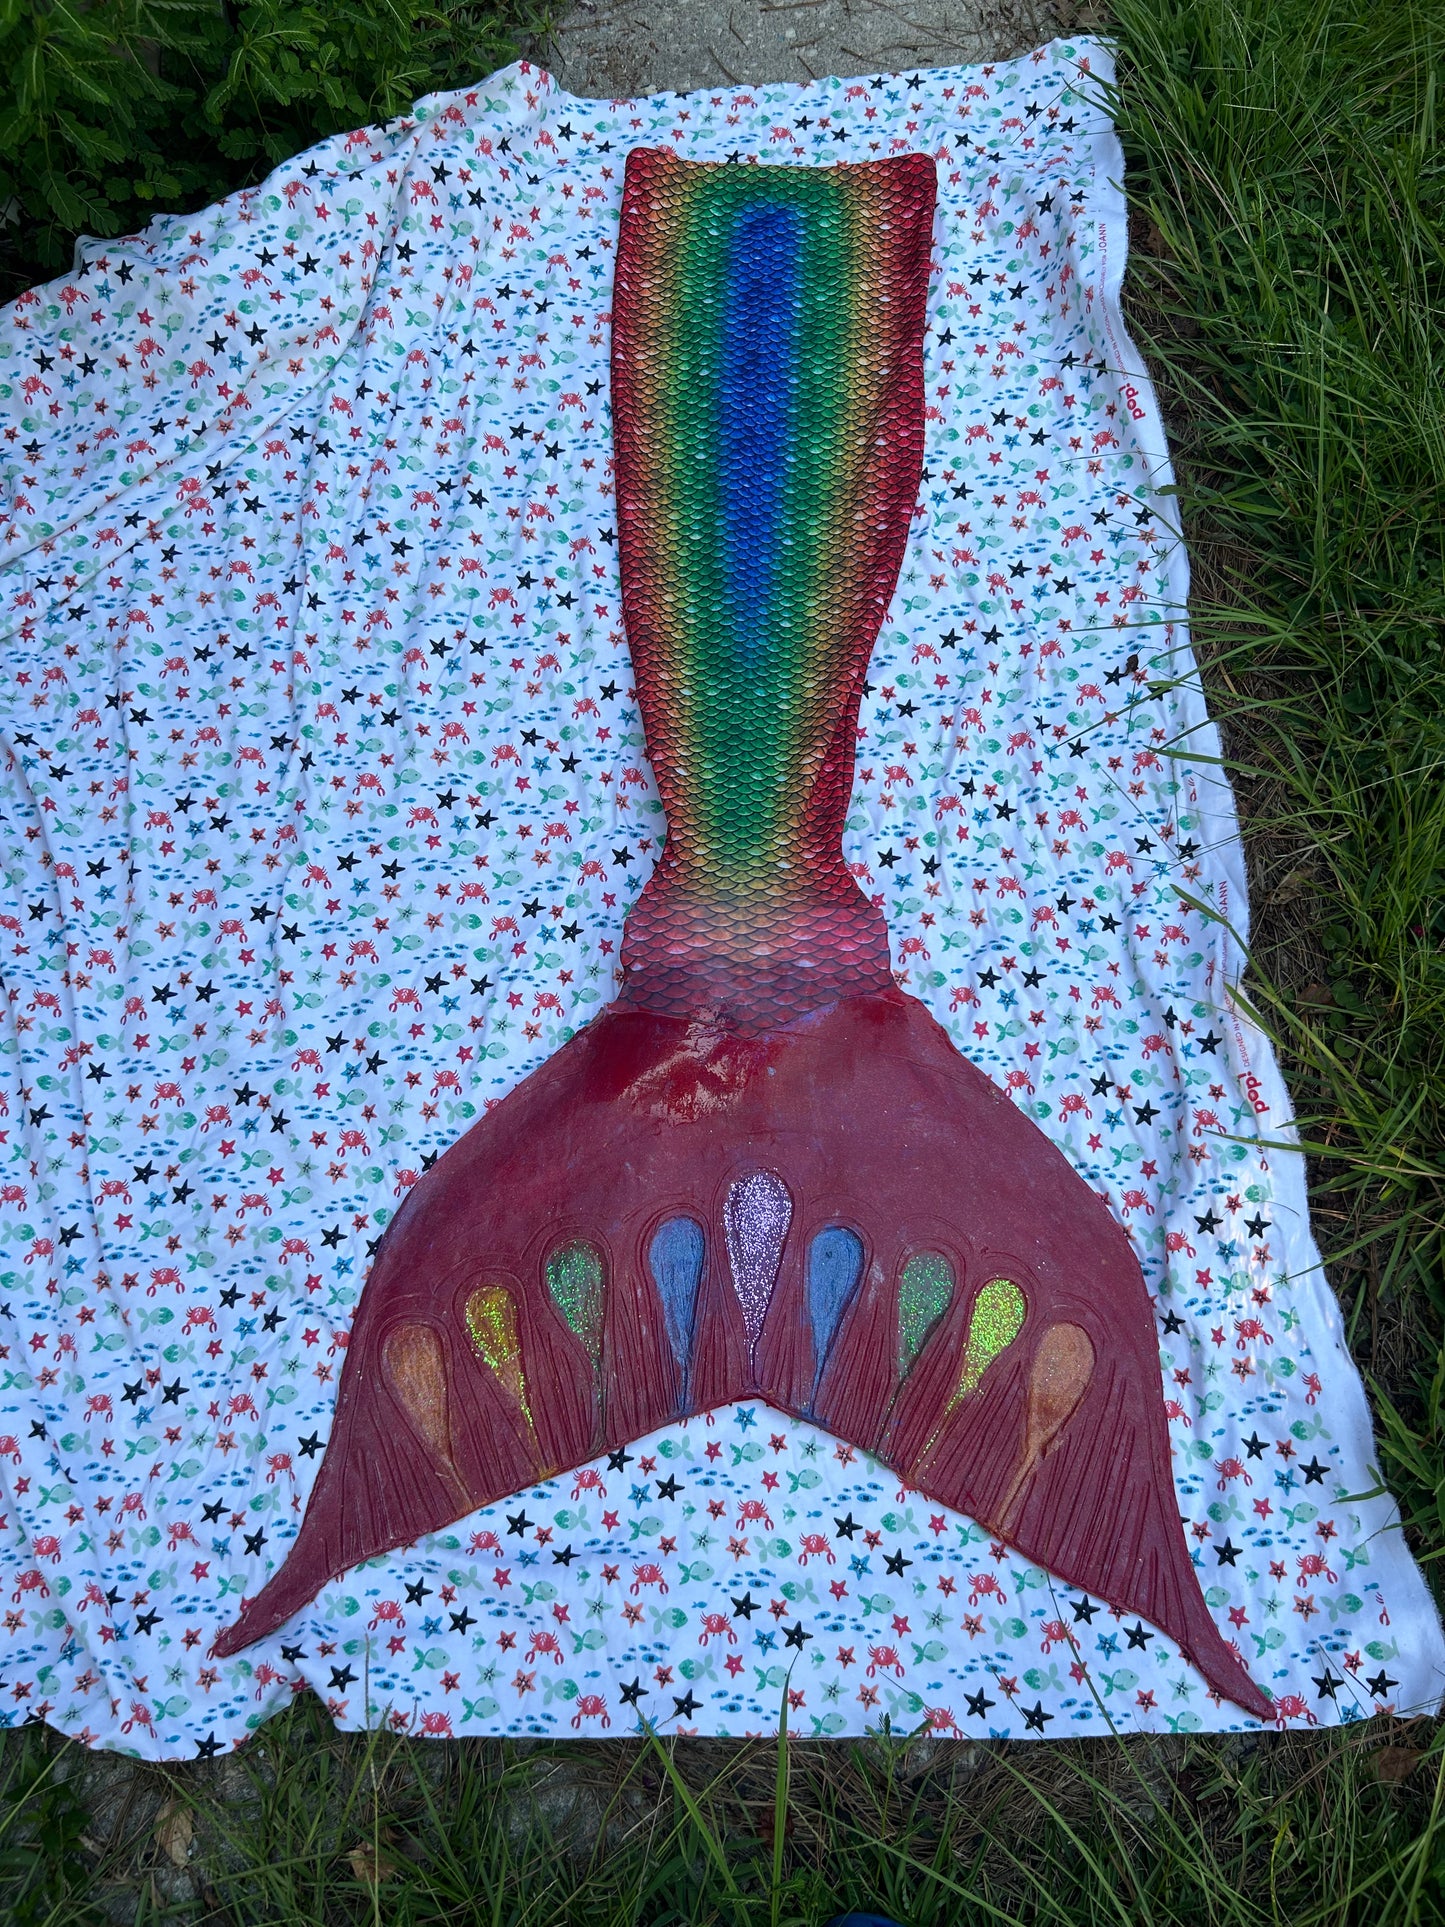 Rainbow Mermaid Tail hybrid tail ready to ship!